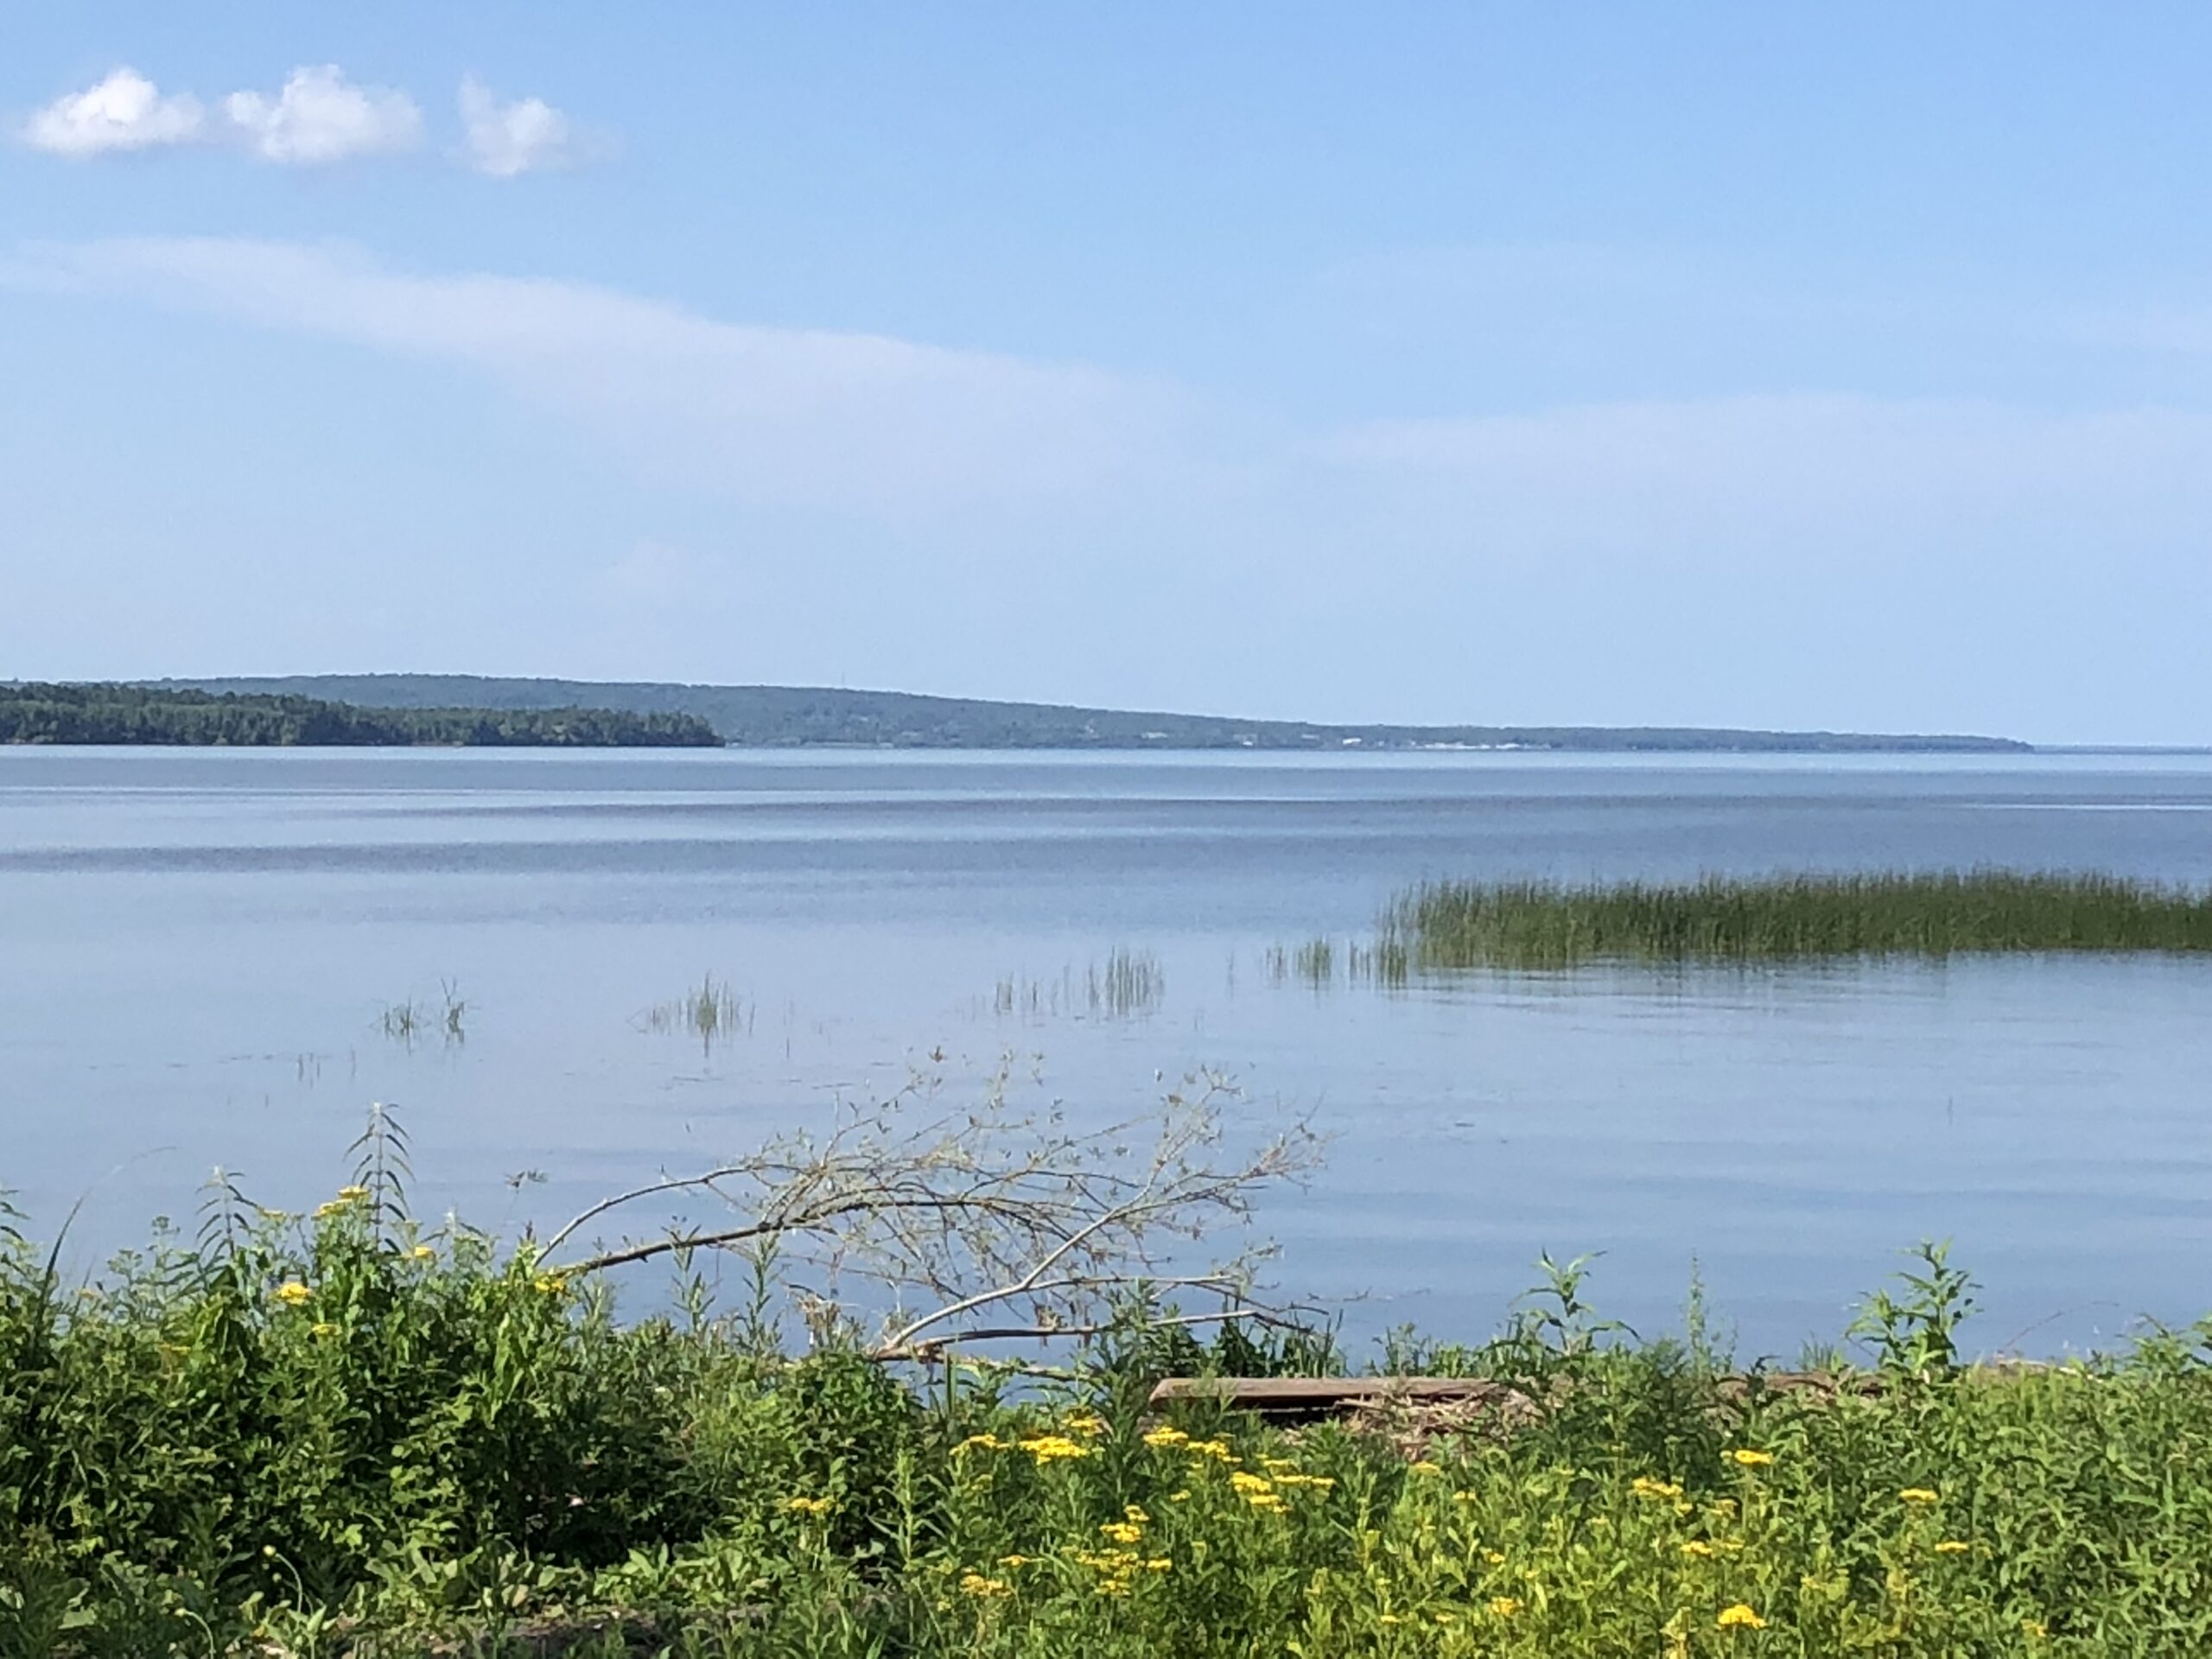 The Chequamegon Bay of Lake Superior